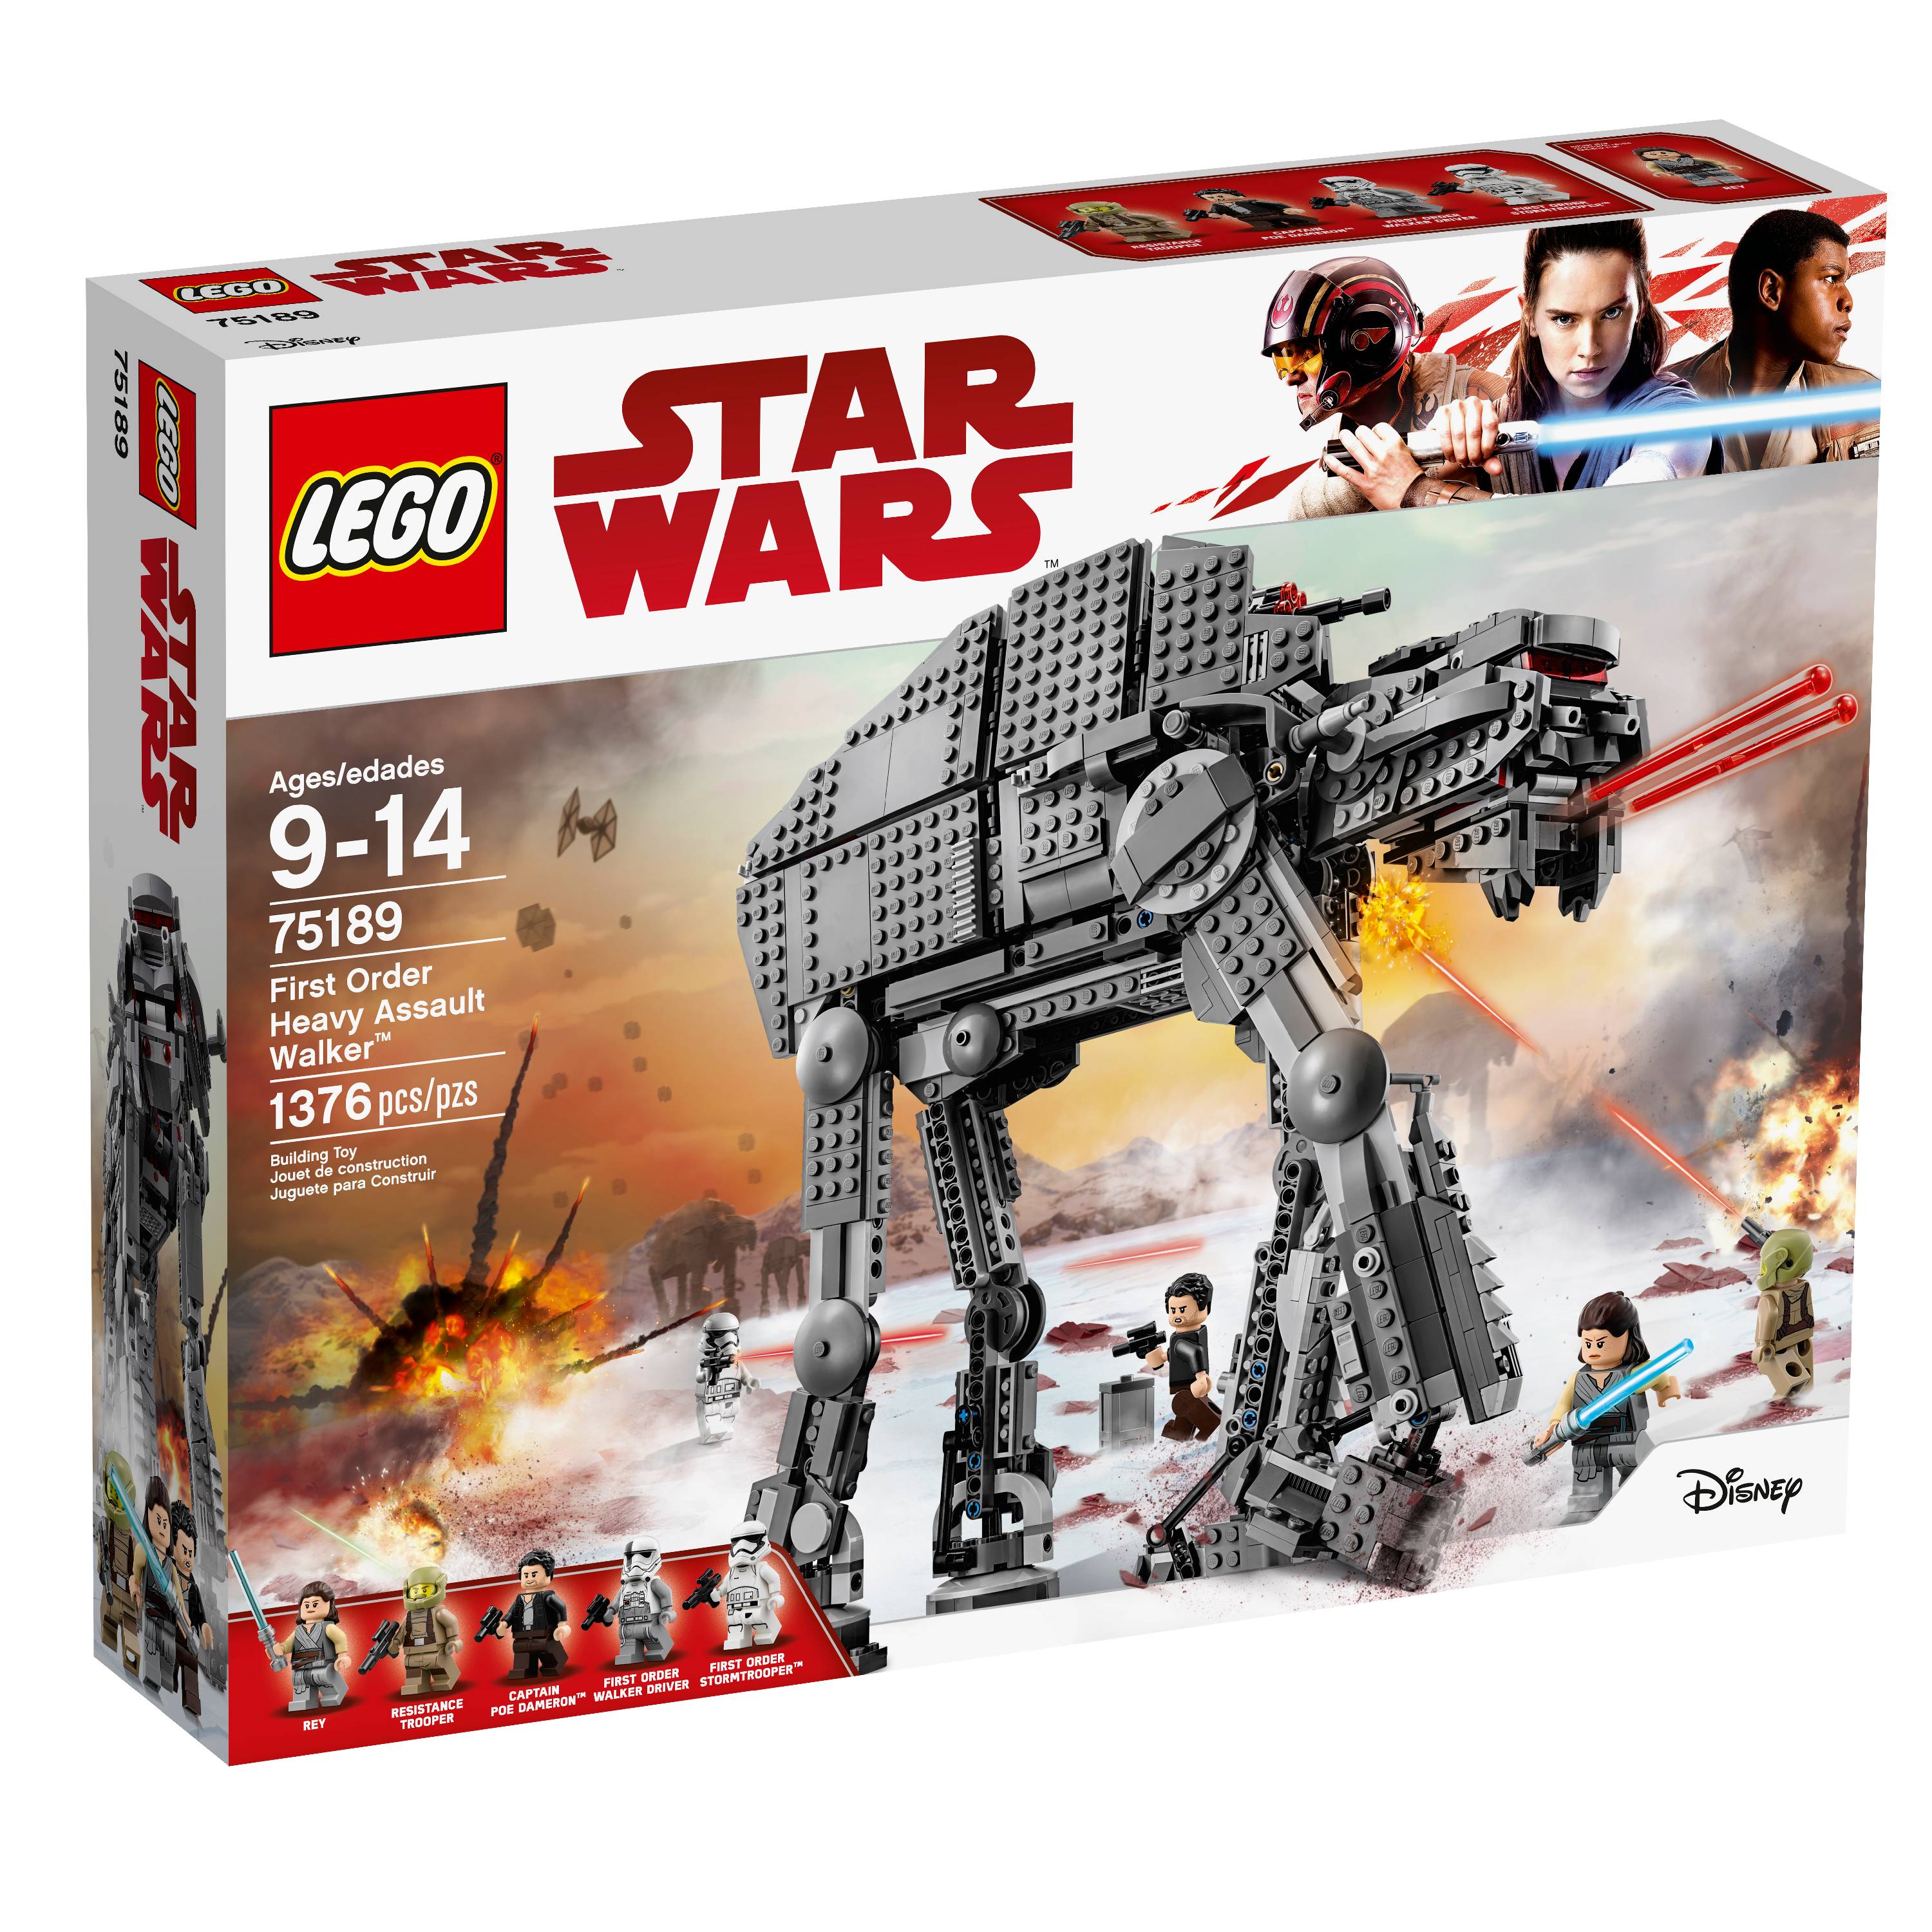 LEGO Star Wars First Order Heavy Assault Walker 75189 - image 3 of 6